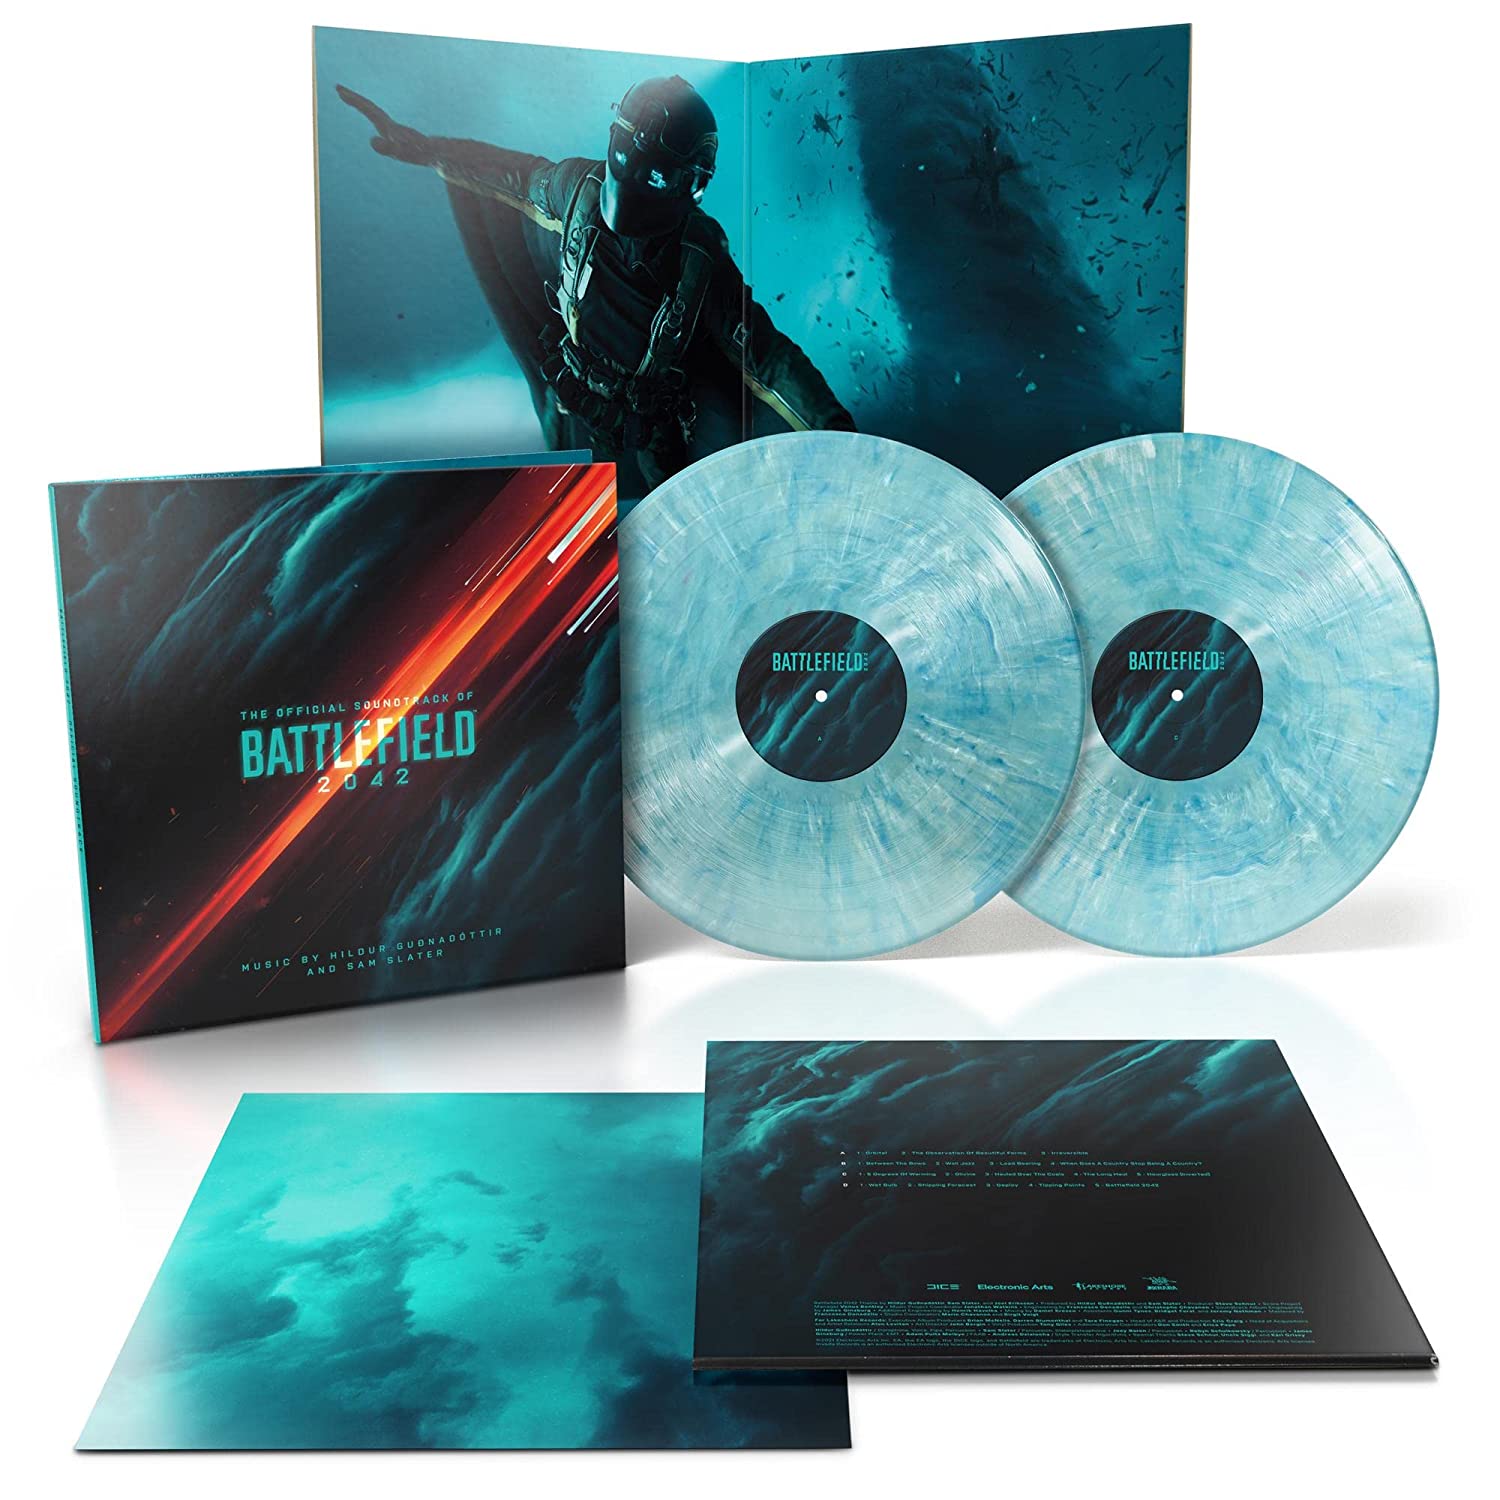 Hildur Guenadottir - Battlefield 2042 (Official Soundtrack) [Blue w/ White Burst Vinyl]